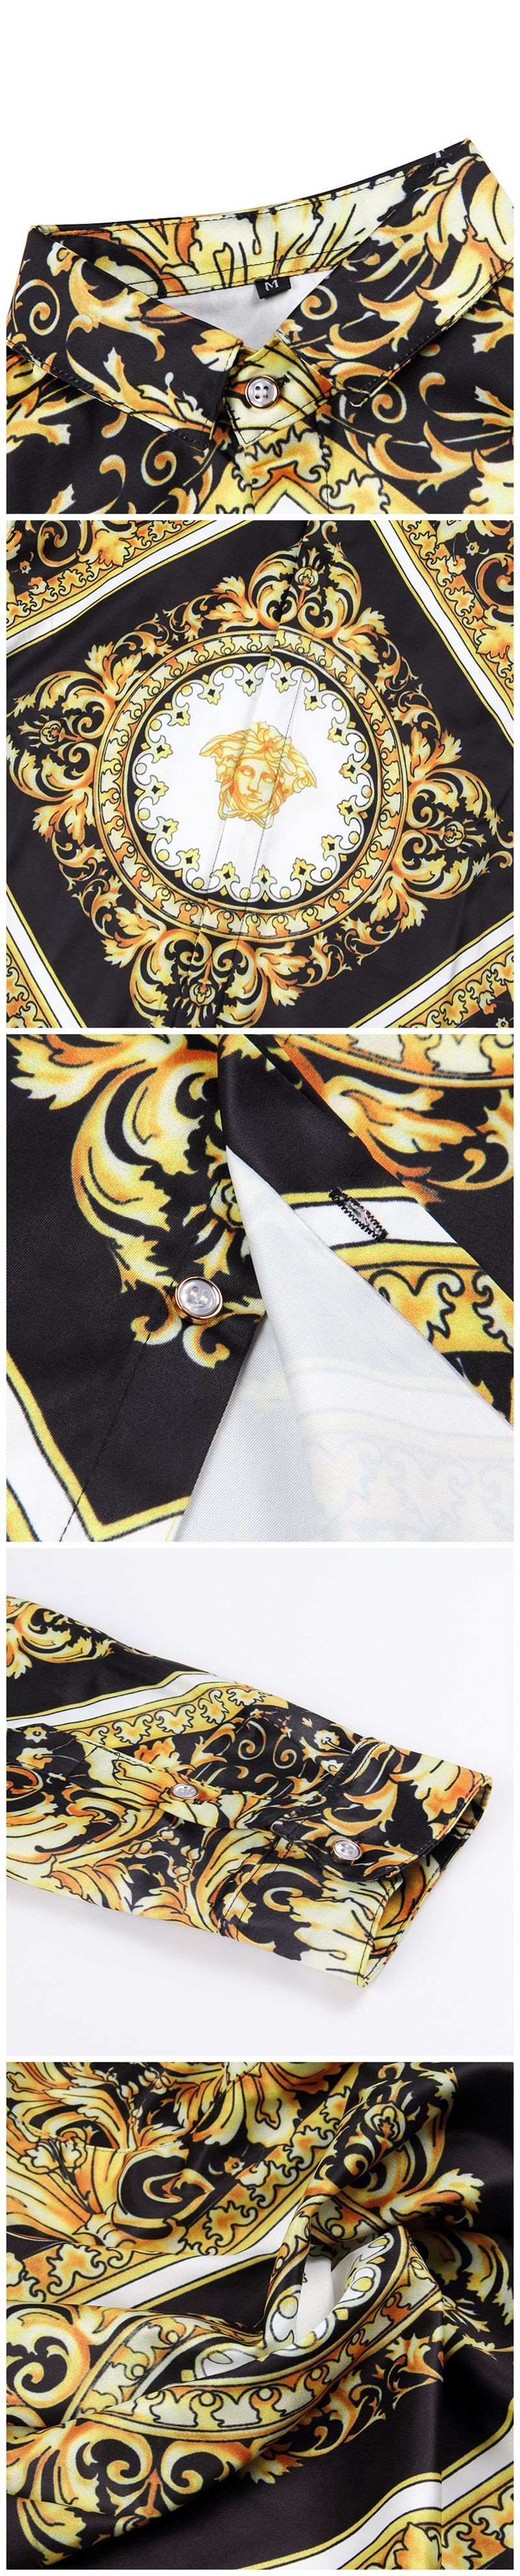 Long Sleeve Luxury Mens Fancy Shirts Newest Unique Brand Baroque Royal Men Gold Print 3D Floral Shirt Camisas Hombre Masculino (5)